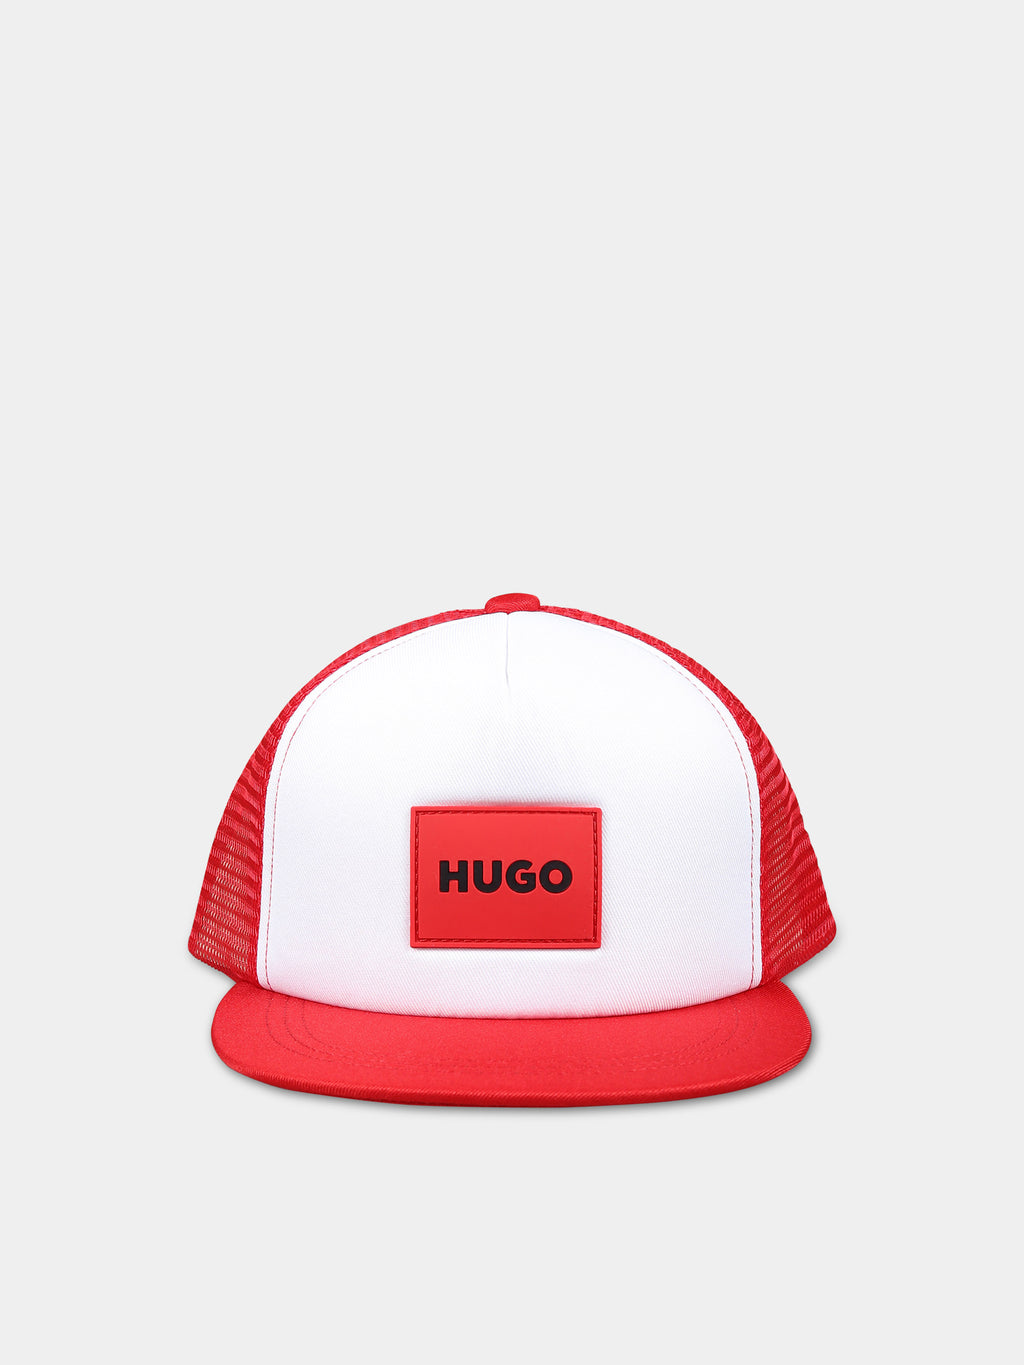 Multicolor visor hat for boy with logo